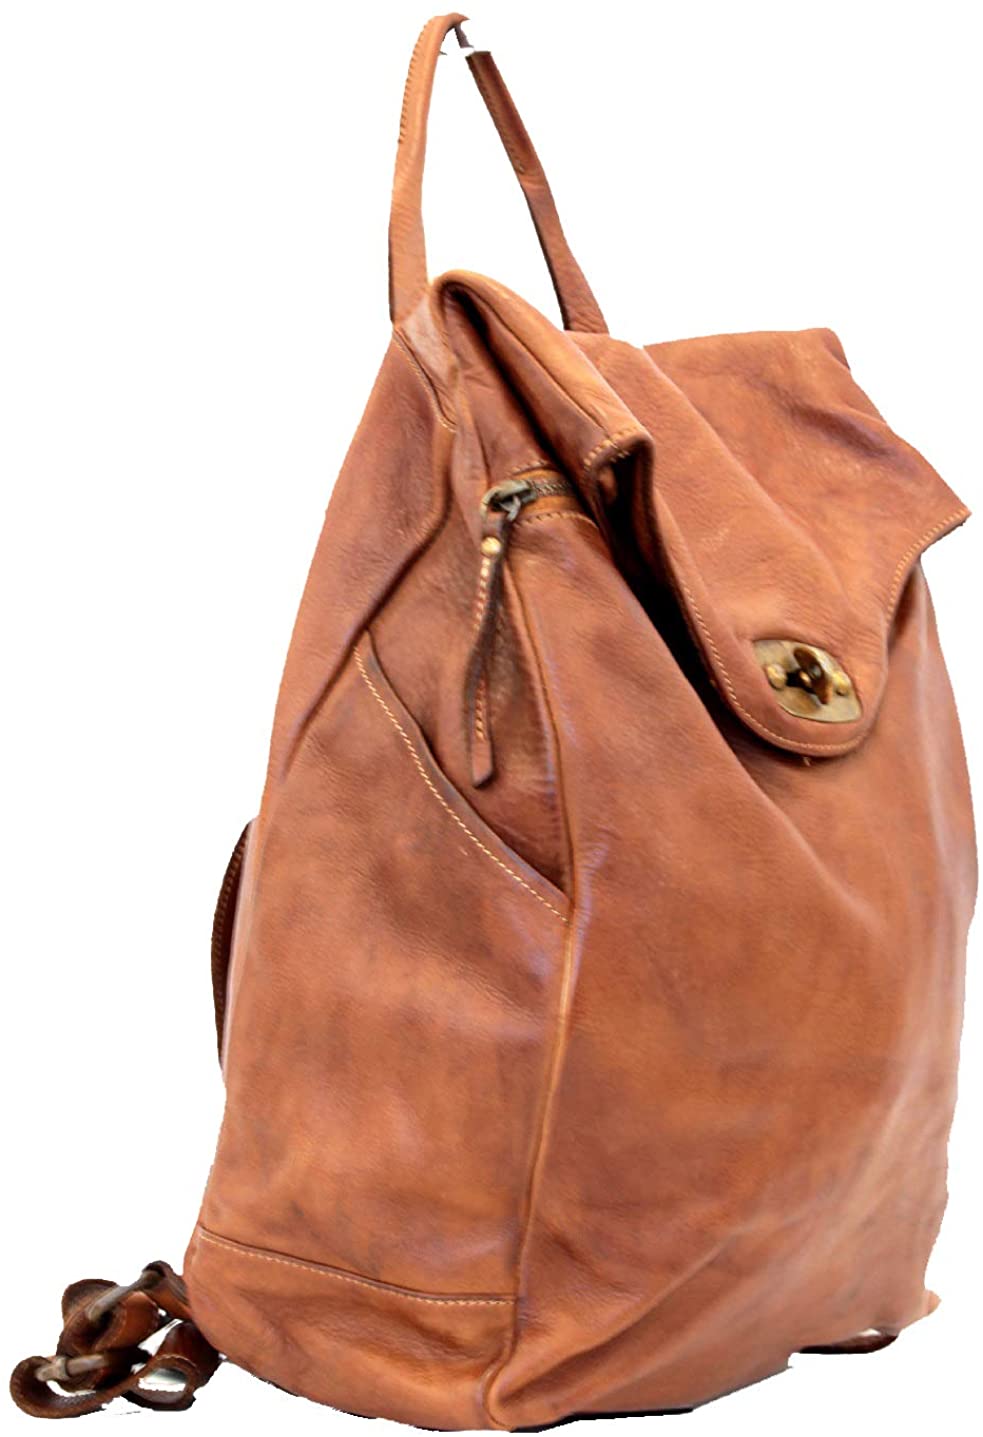 BZNA Bag Rinalto grau Italy Rucksack Backpacker Designer Tasche Handtasche Schultertasche Leder Damen Neu